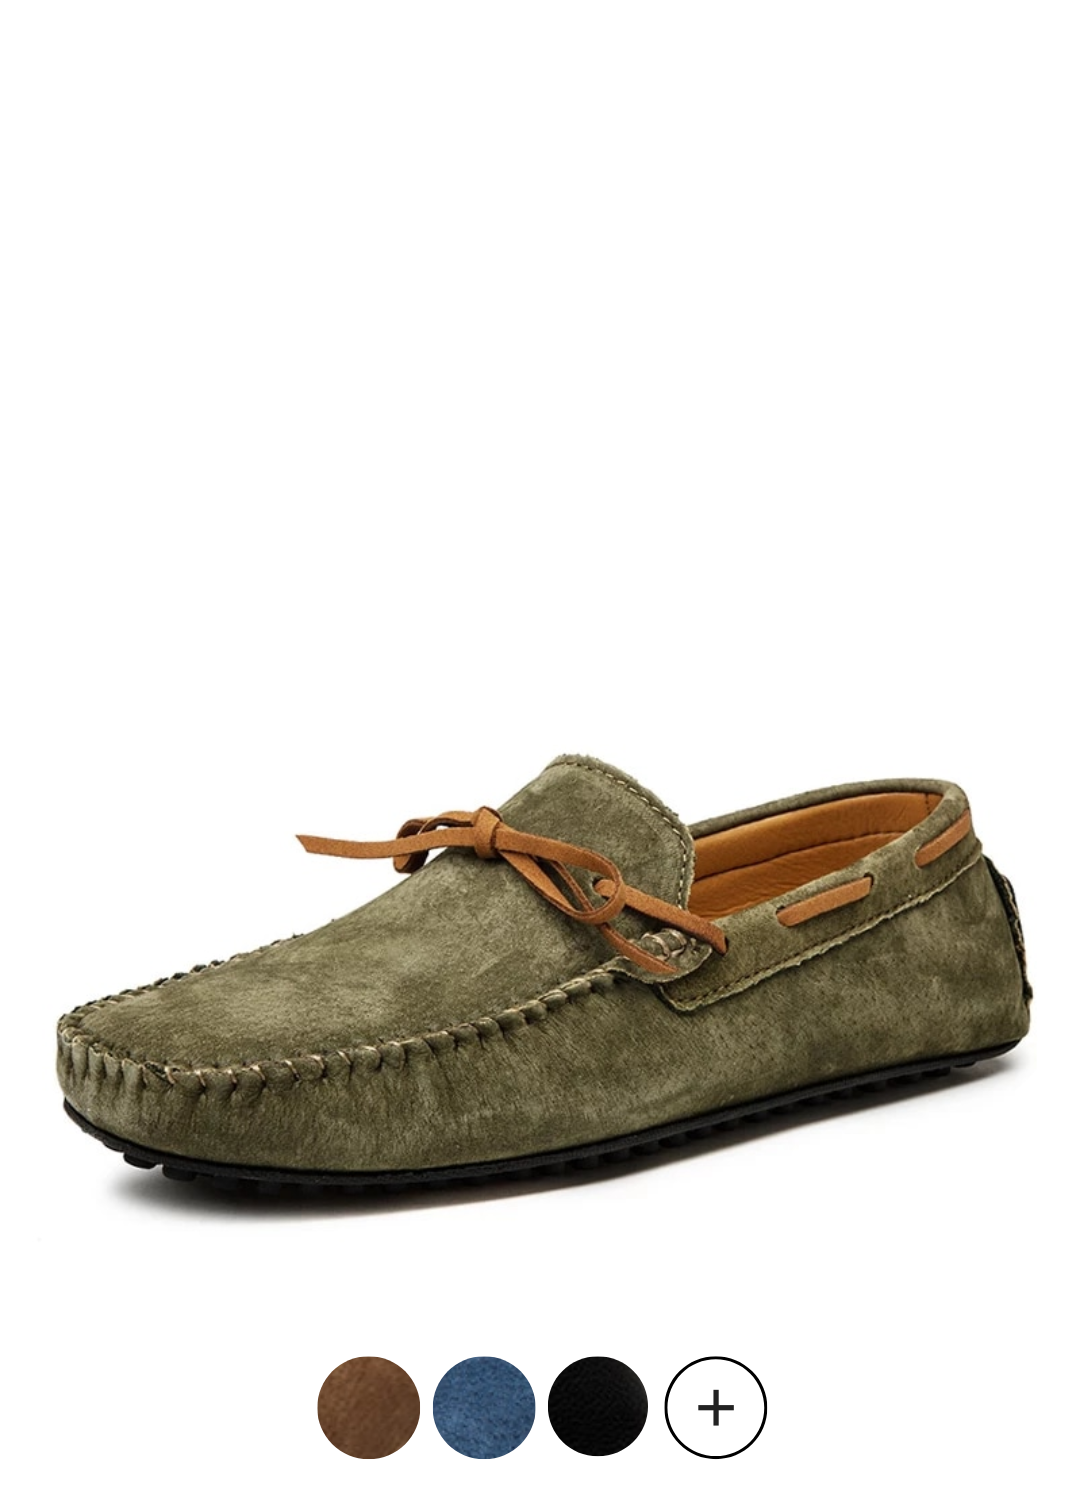 Louis Men's Loafer Shoes | Ultrasellershoes.com – USS® Shoes